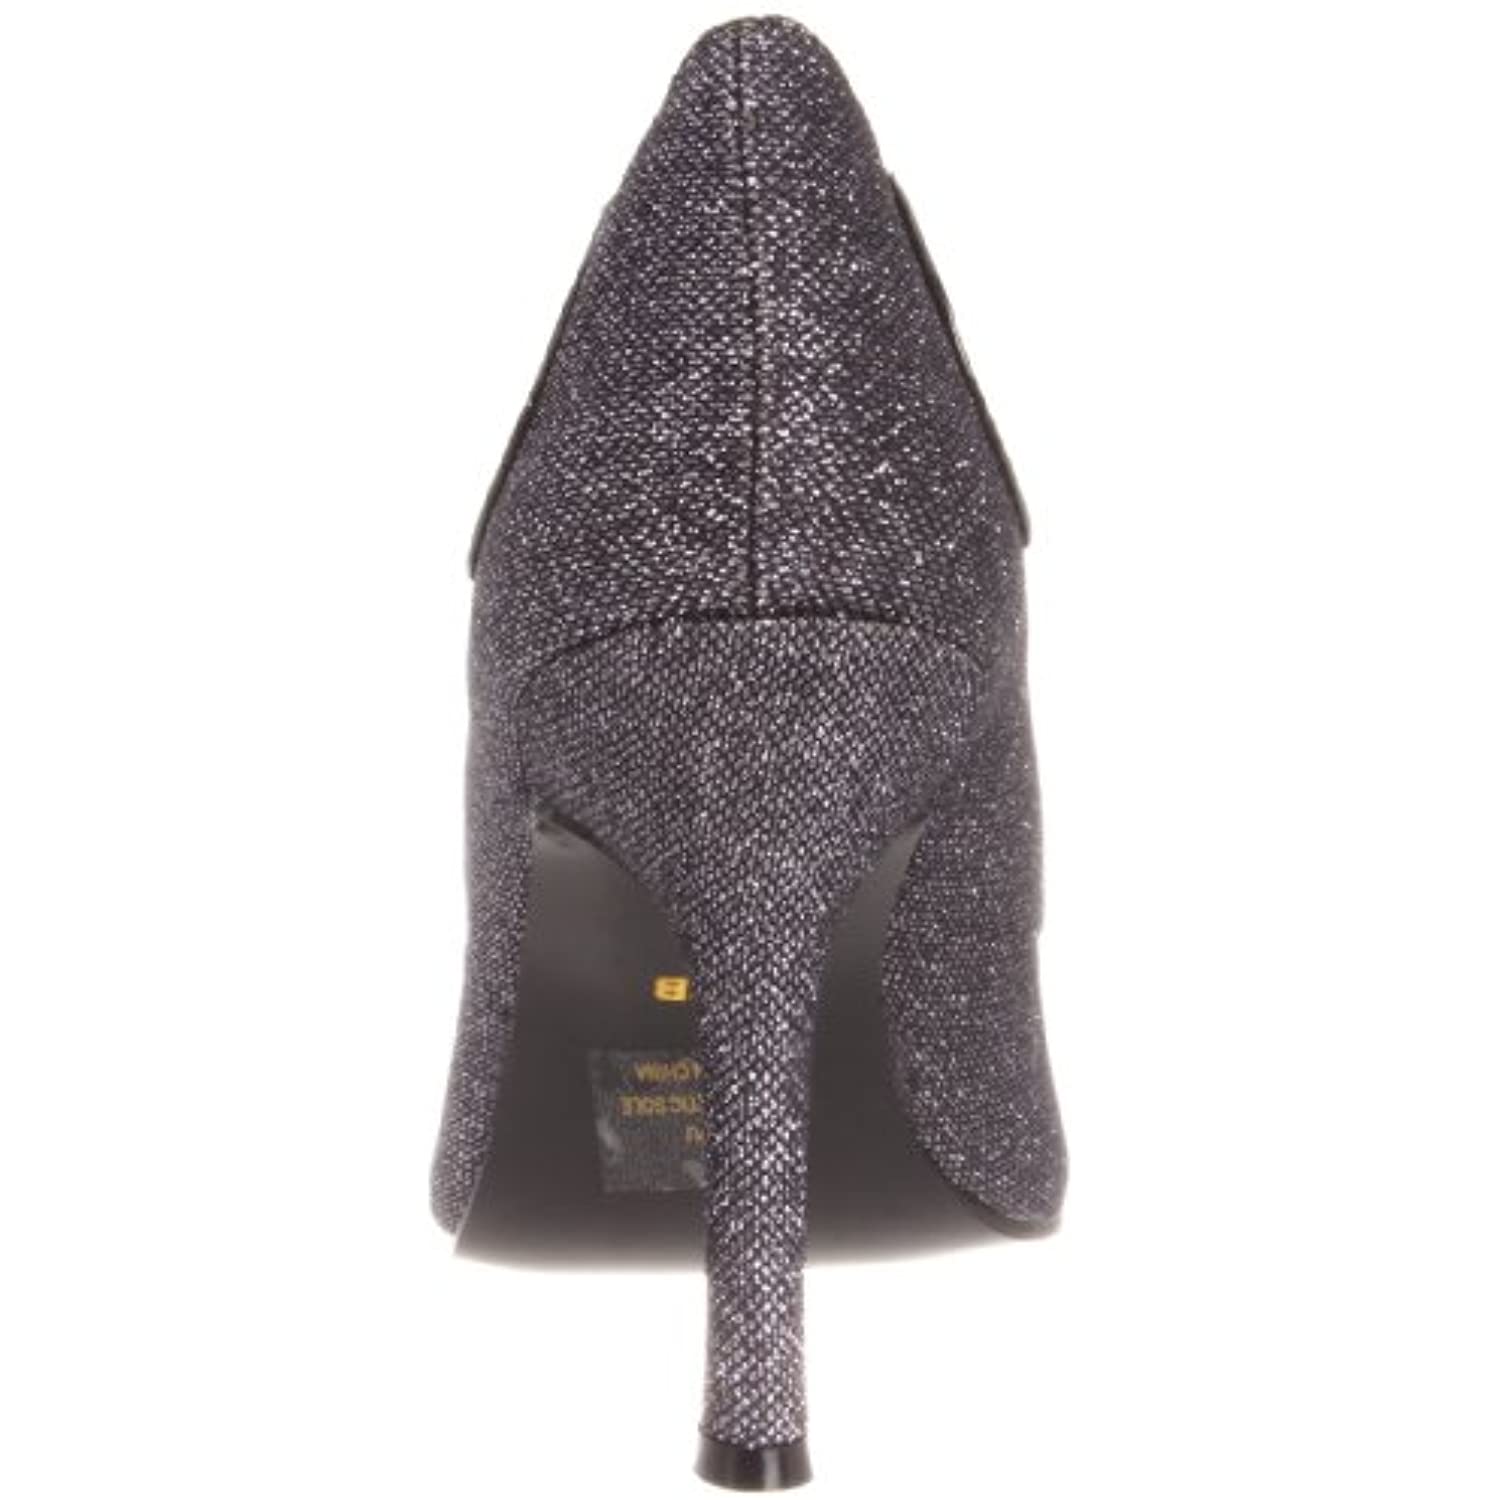 Dyeables Women's Tessa Synthetic Peep-Toe Pump,Black Shimmer,8.5 M US